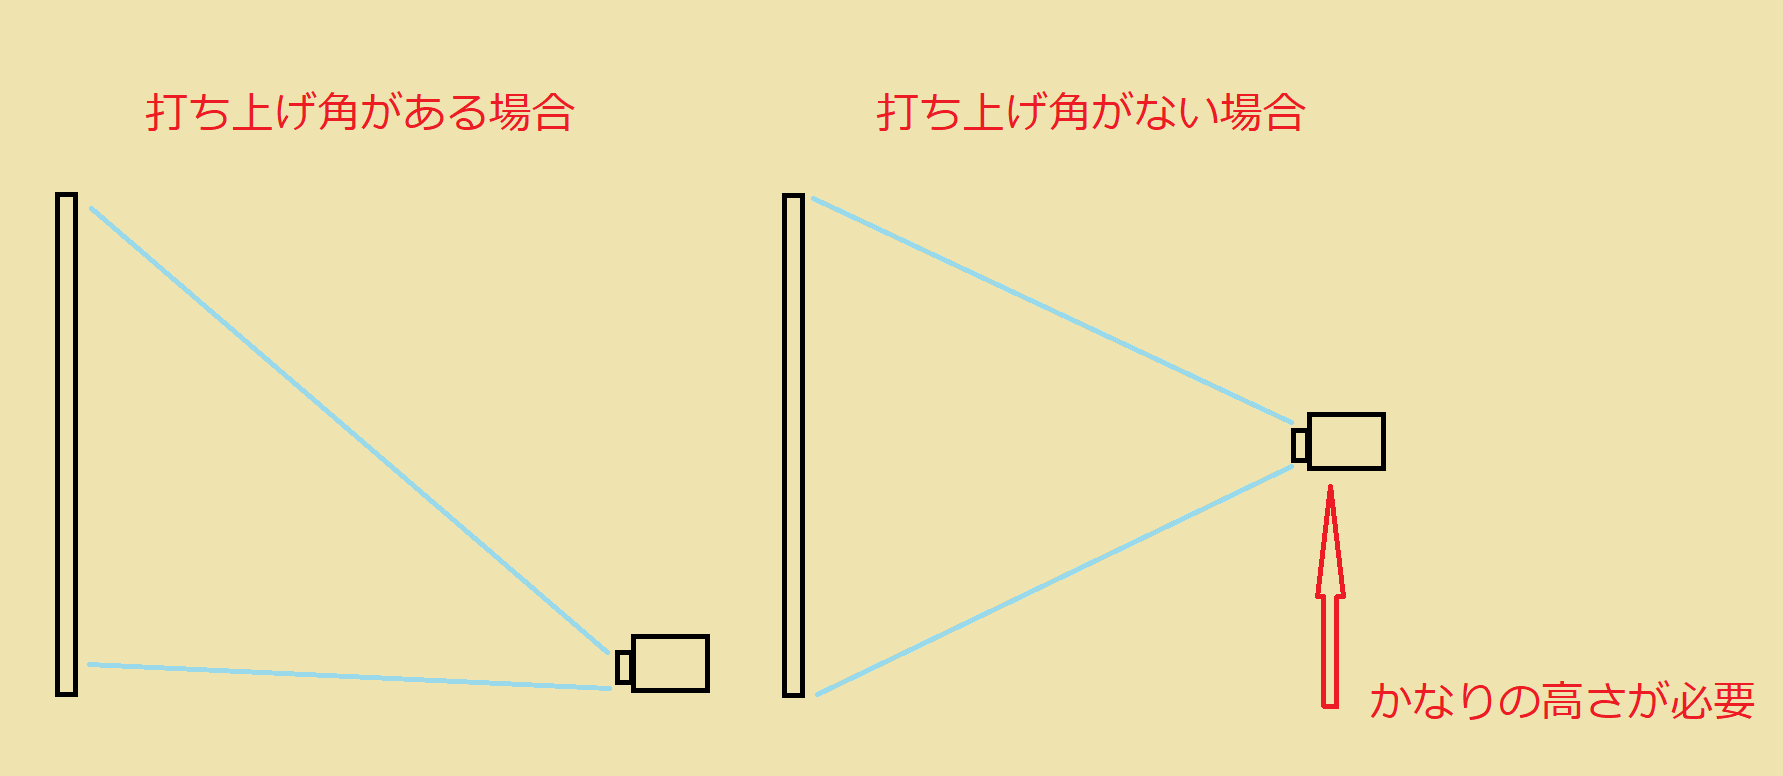 http://www.kitcat.jp/blog/2019/05/17/utiage.png